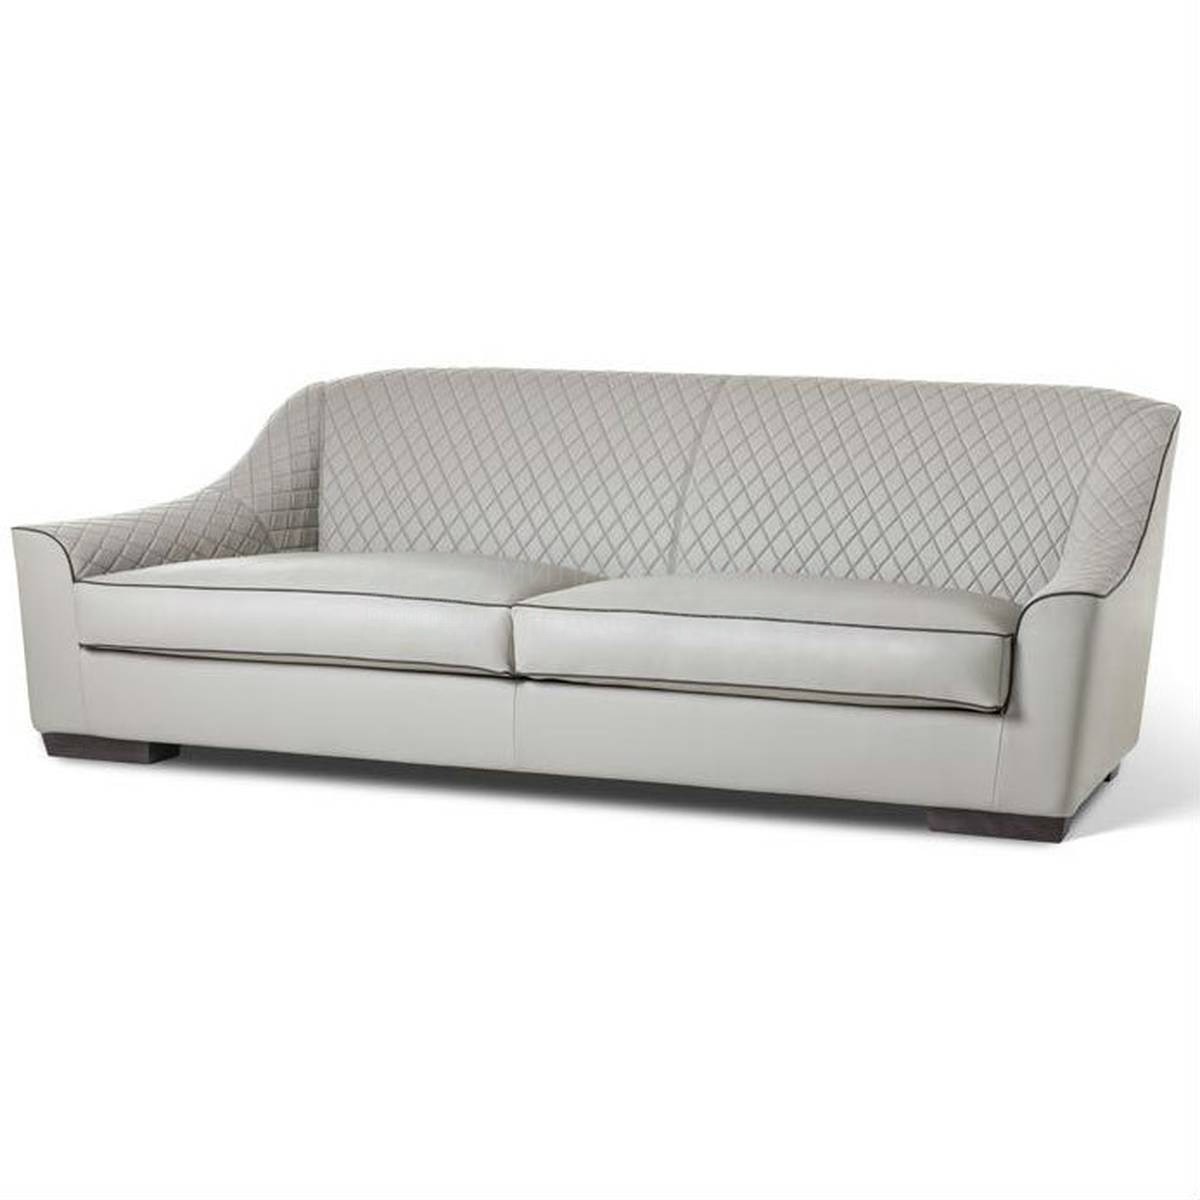 Прямой диван Pascal из Италии фабрики MEDEA (Life style)